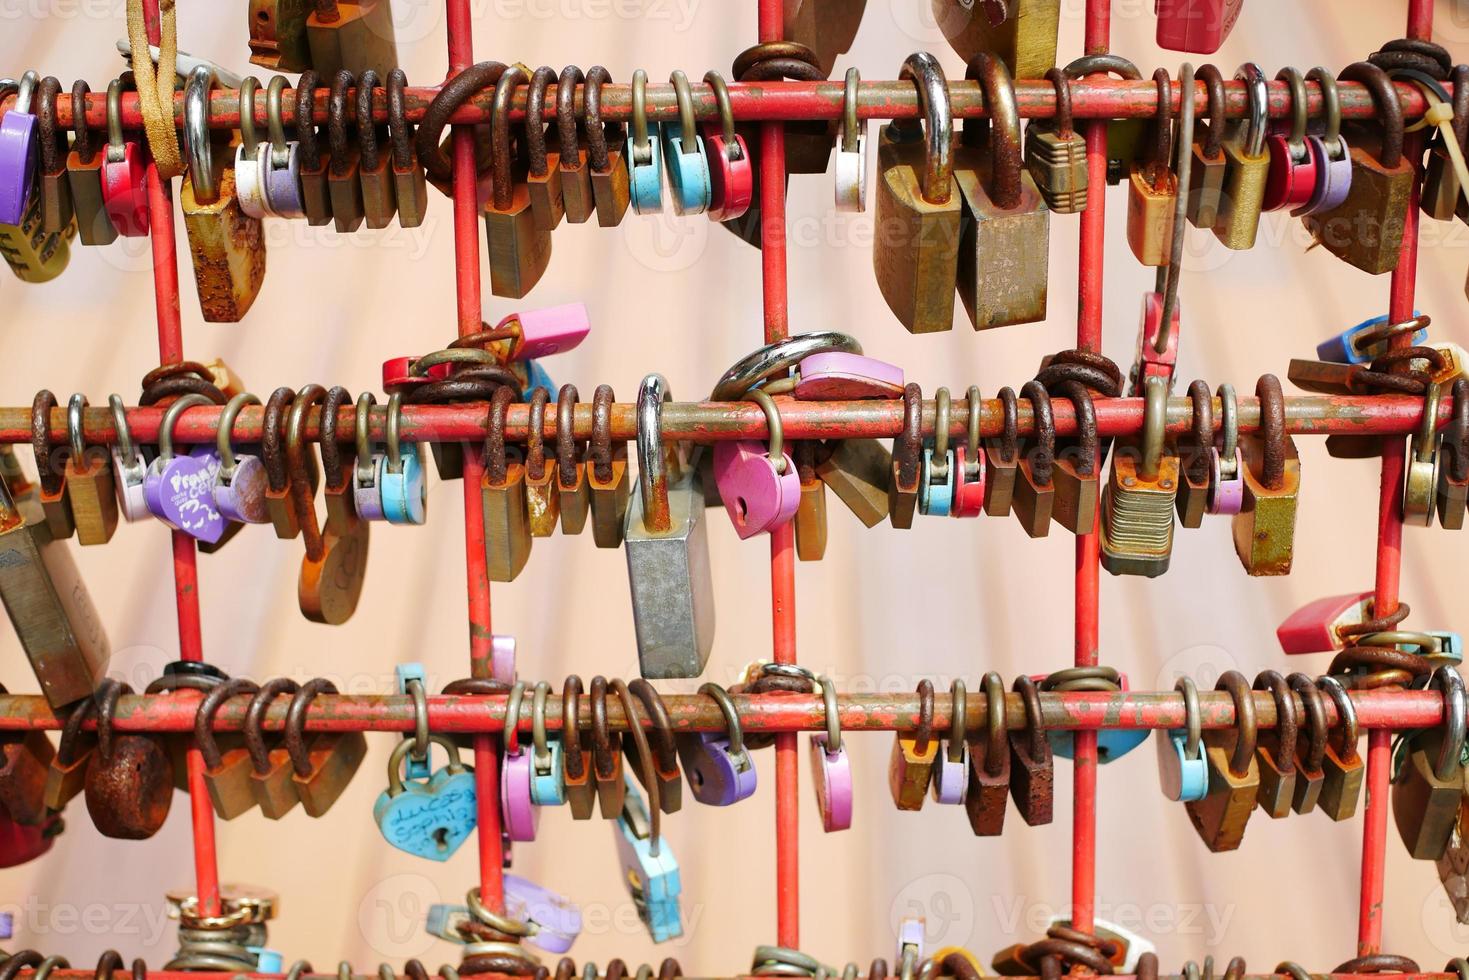 Many love padlocks locked on rusty iron gate in singapore photo